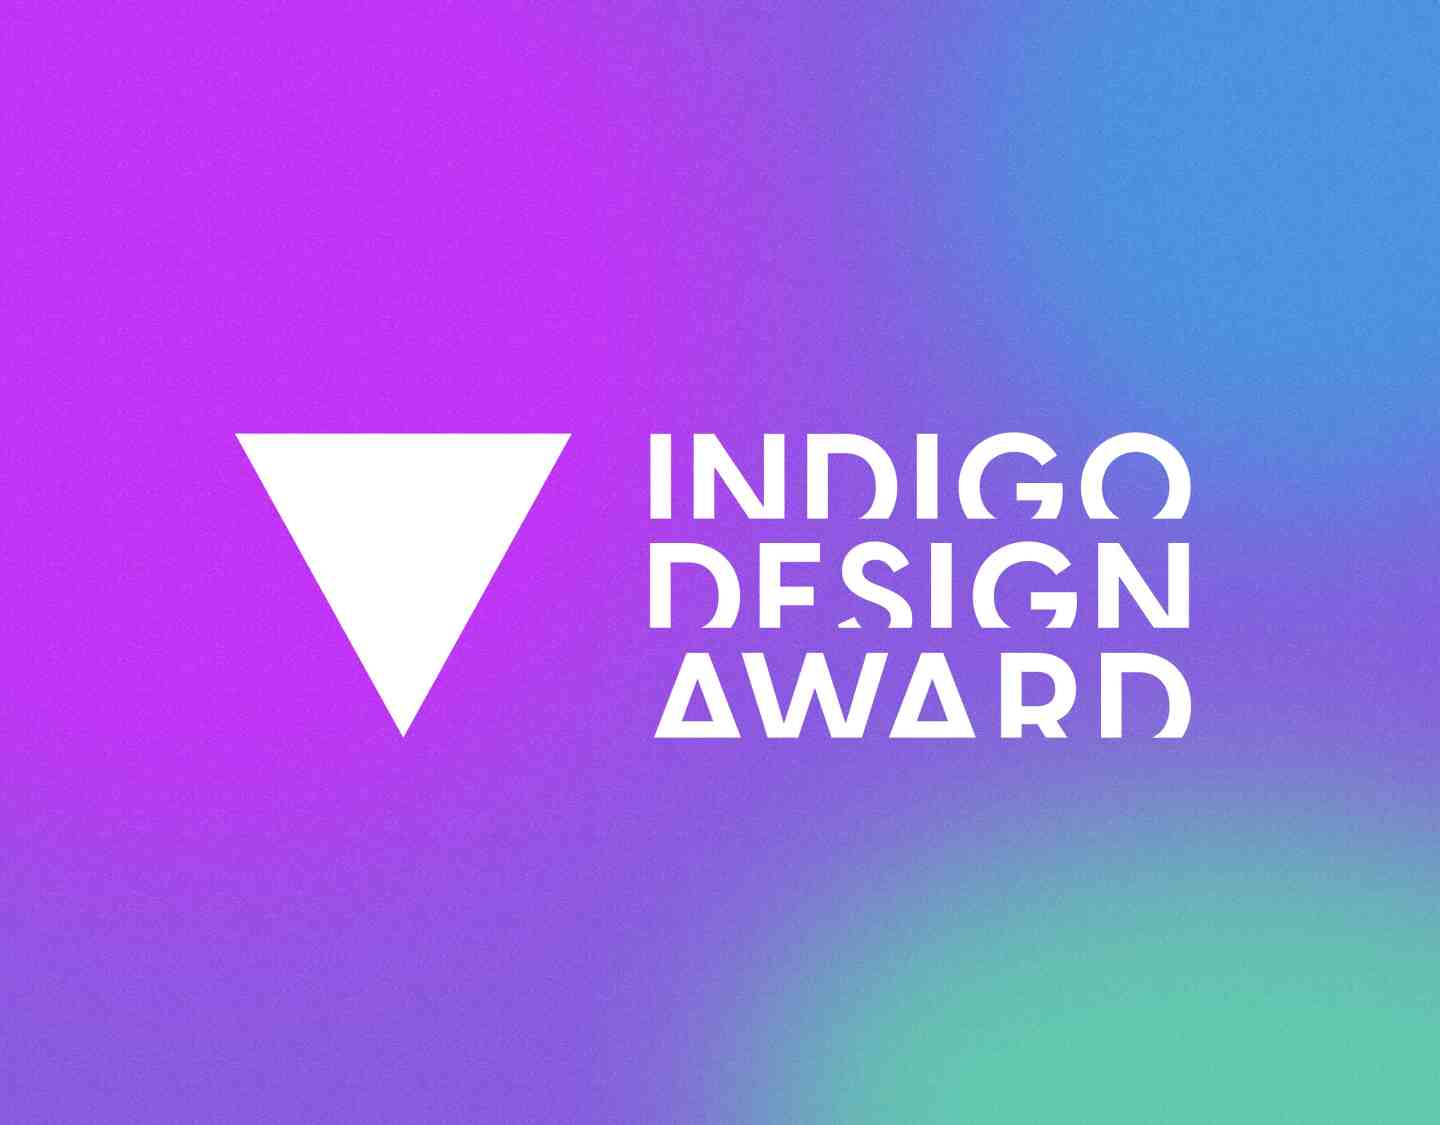 Indigo design awards logo